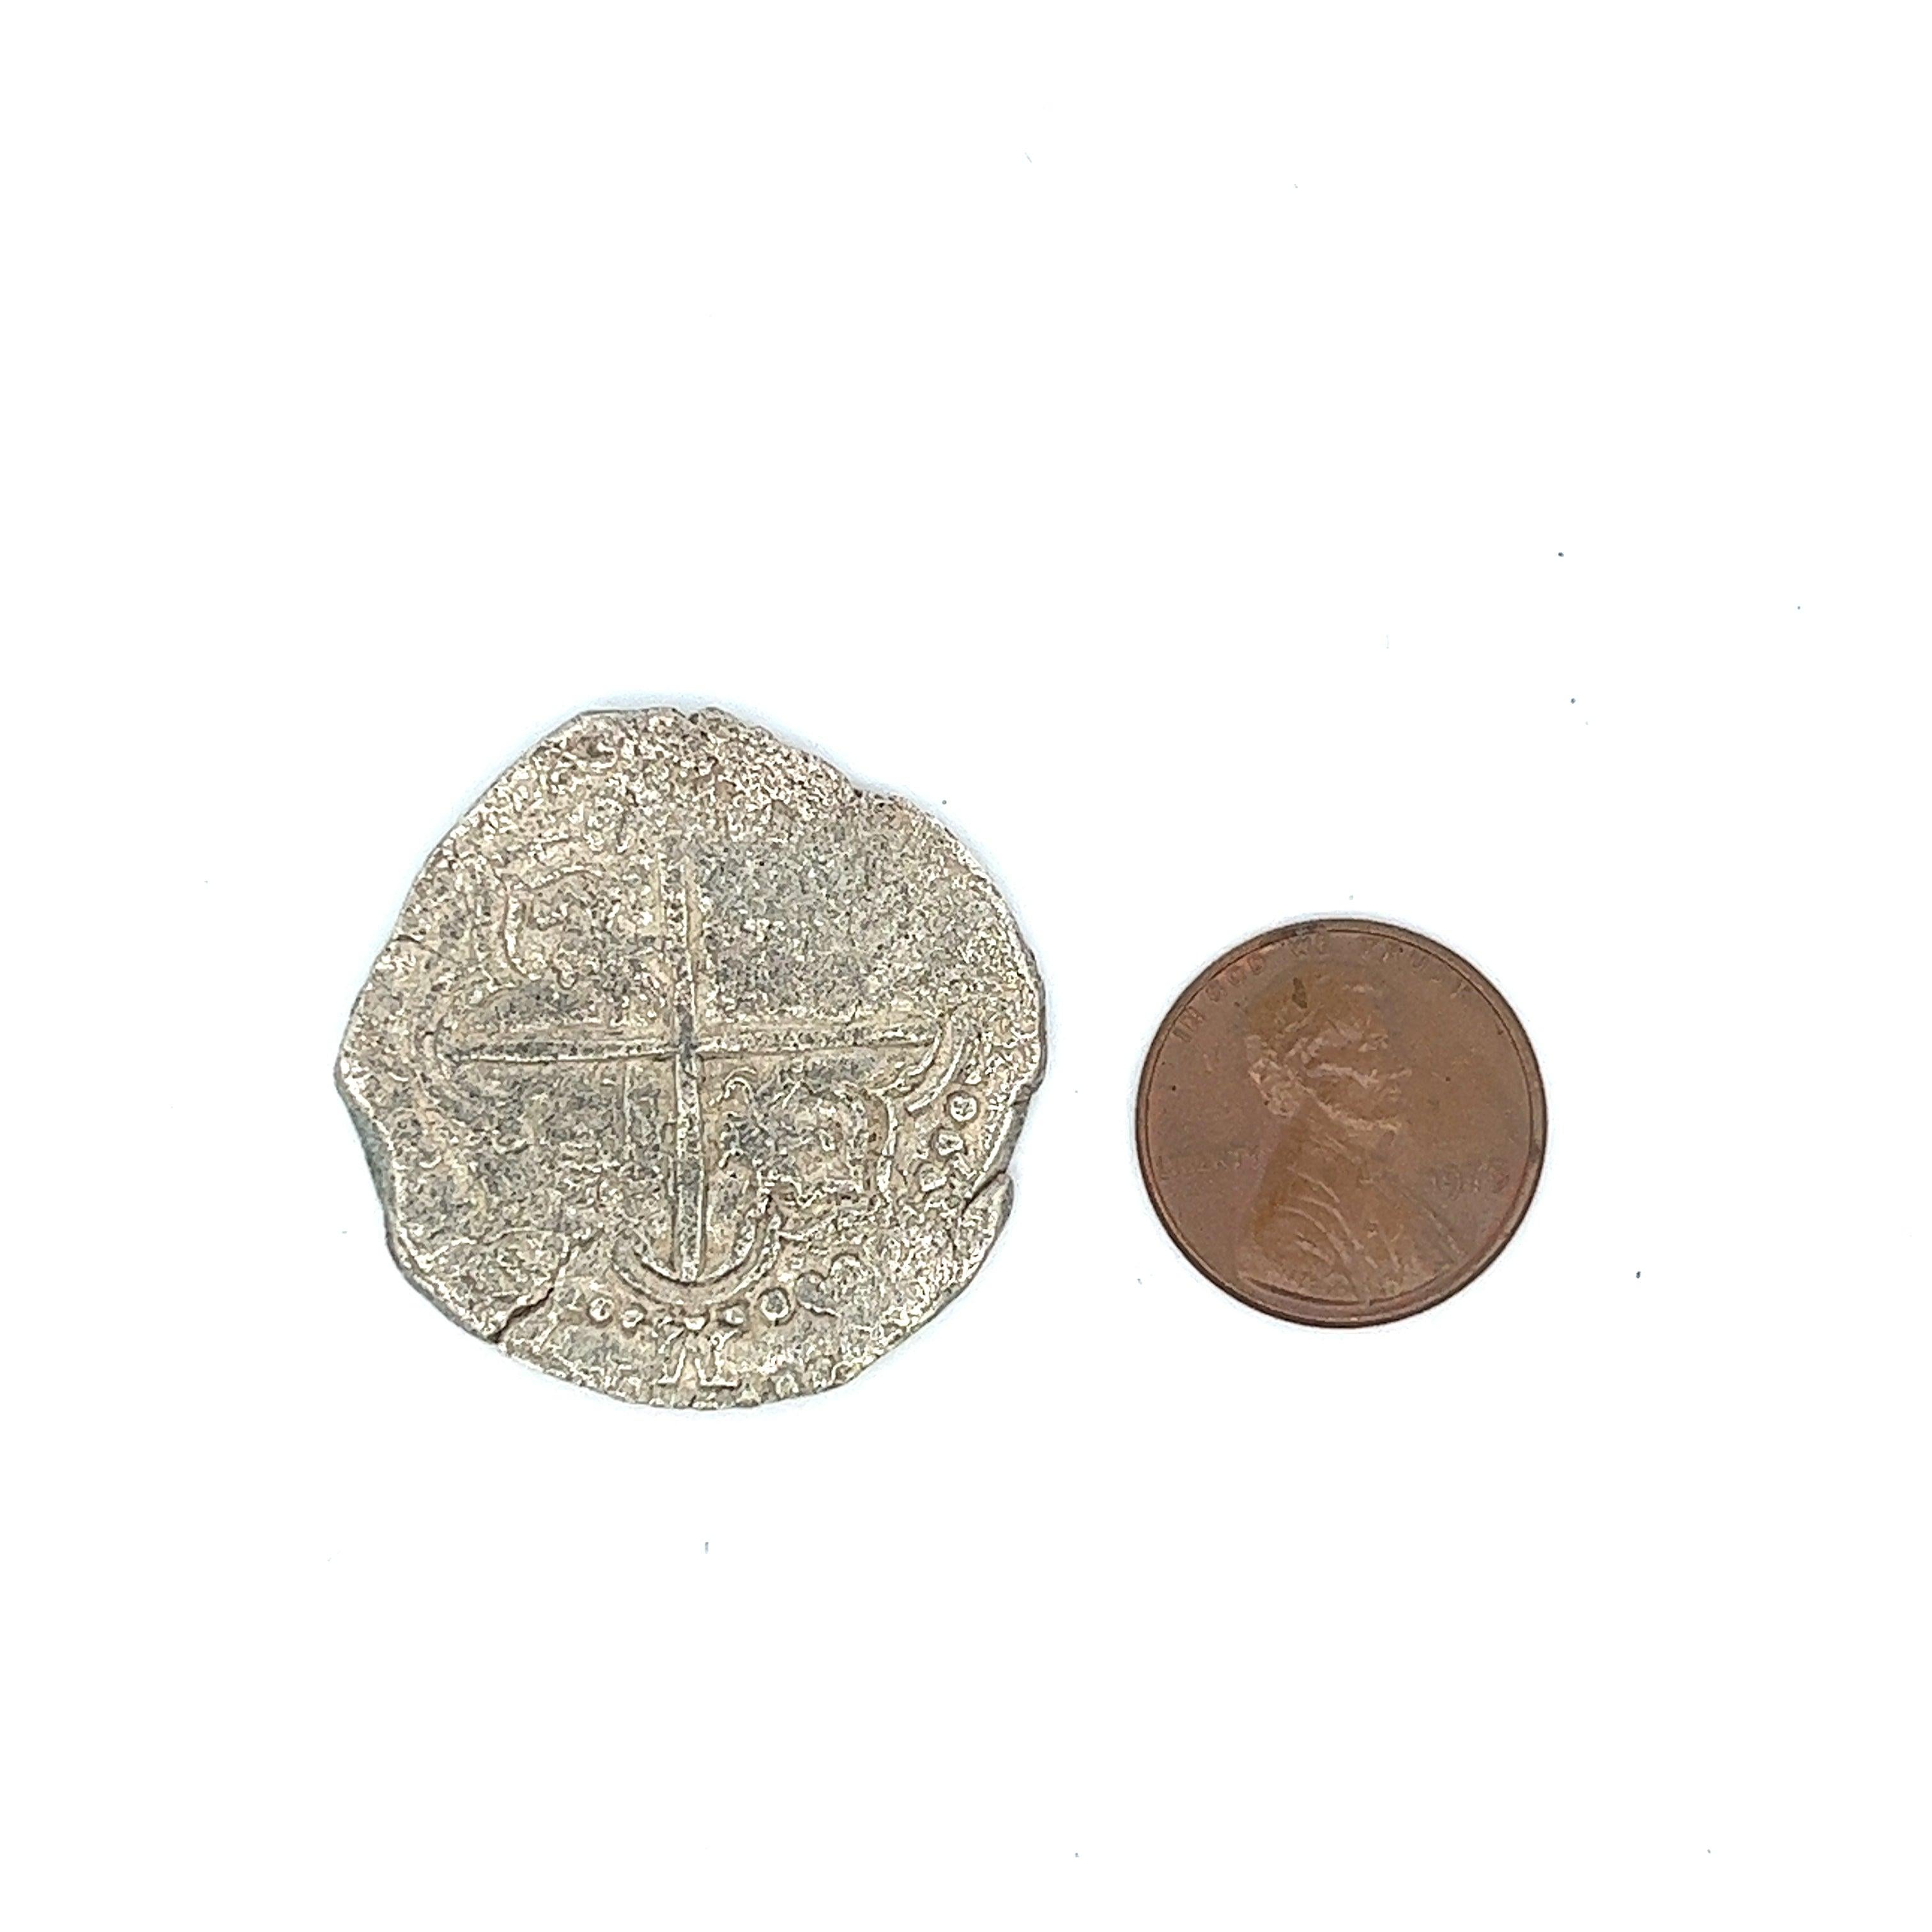 Atocha Shipwreck 4 Reale Grade 2 Potosi Mint Coin and 14K Gold Bezel Pendant For Sale 2